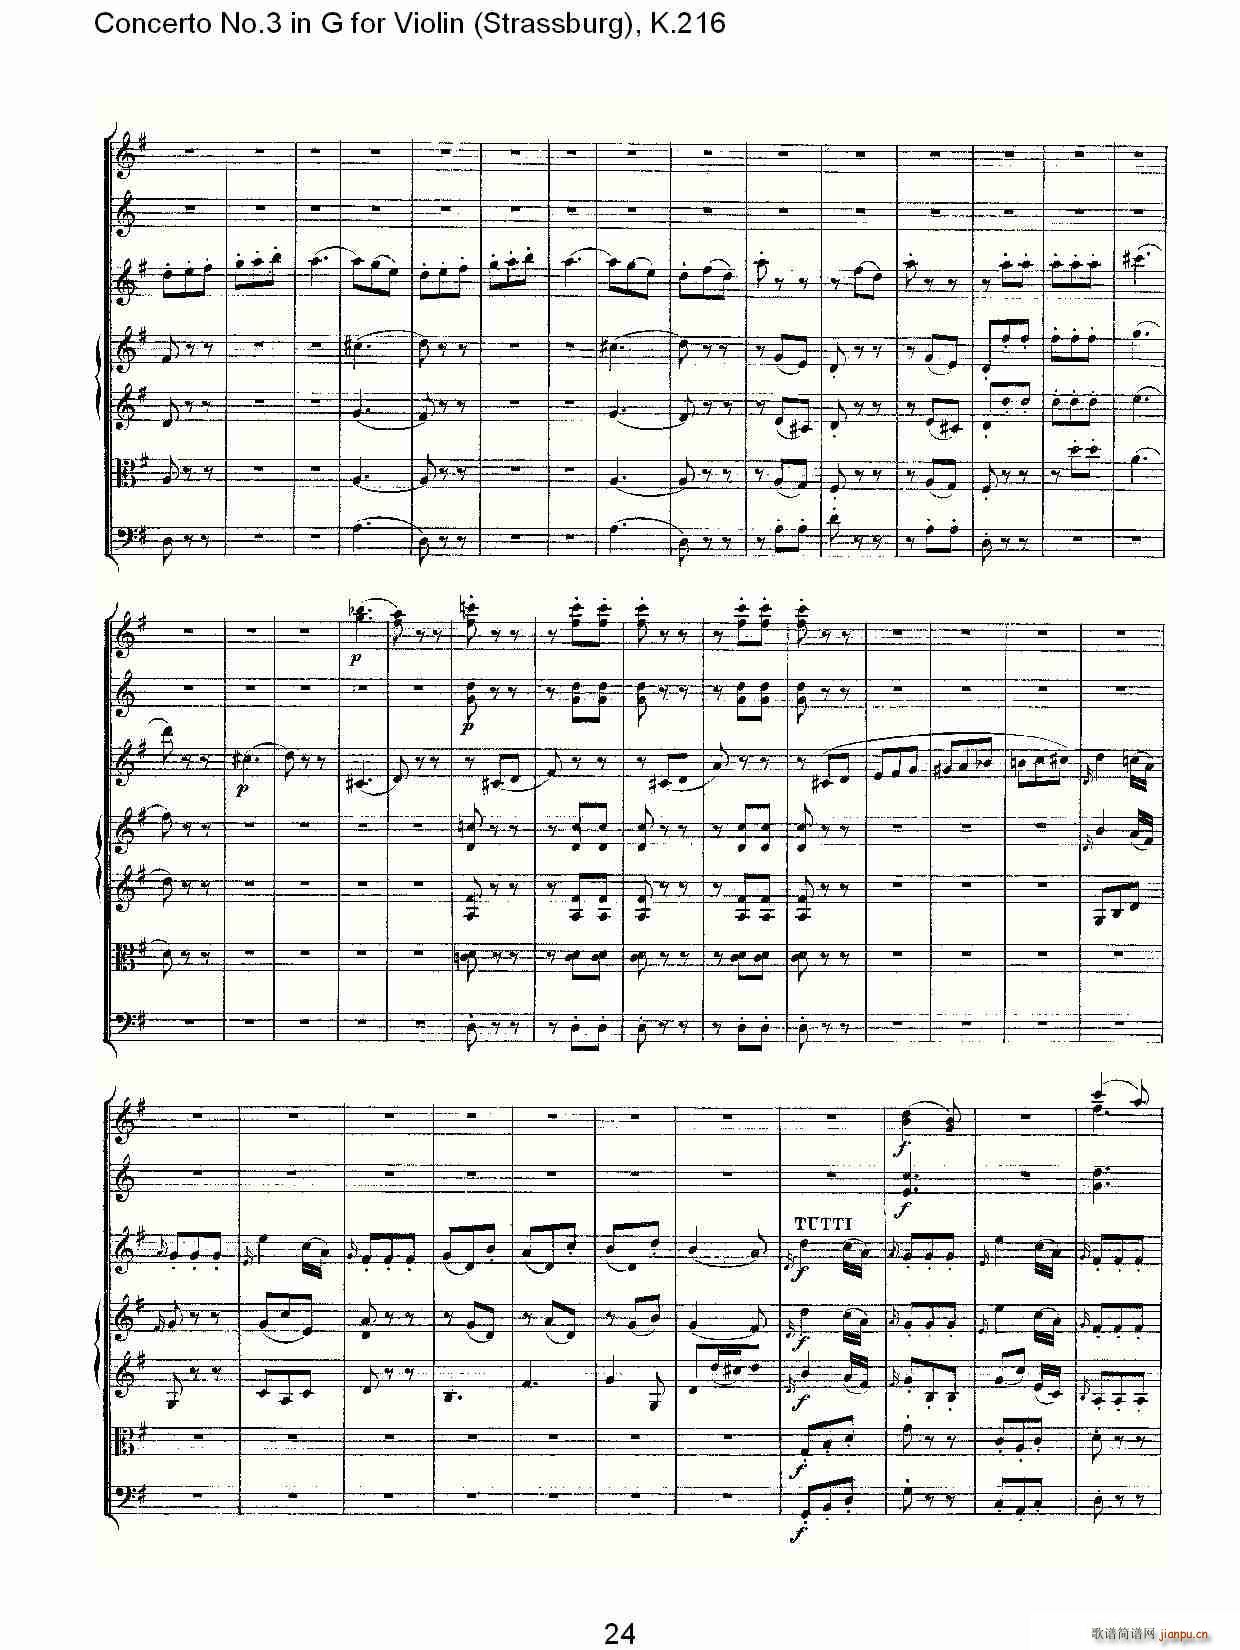 Concerto No.3 in G for Violin K.216(С)24